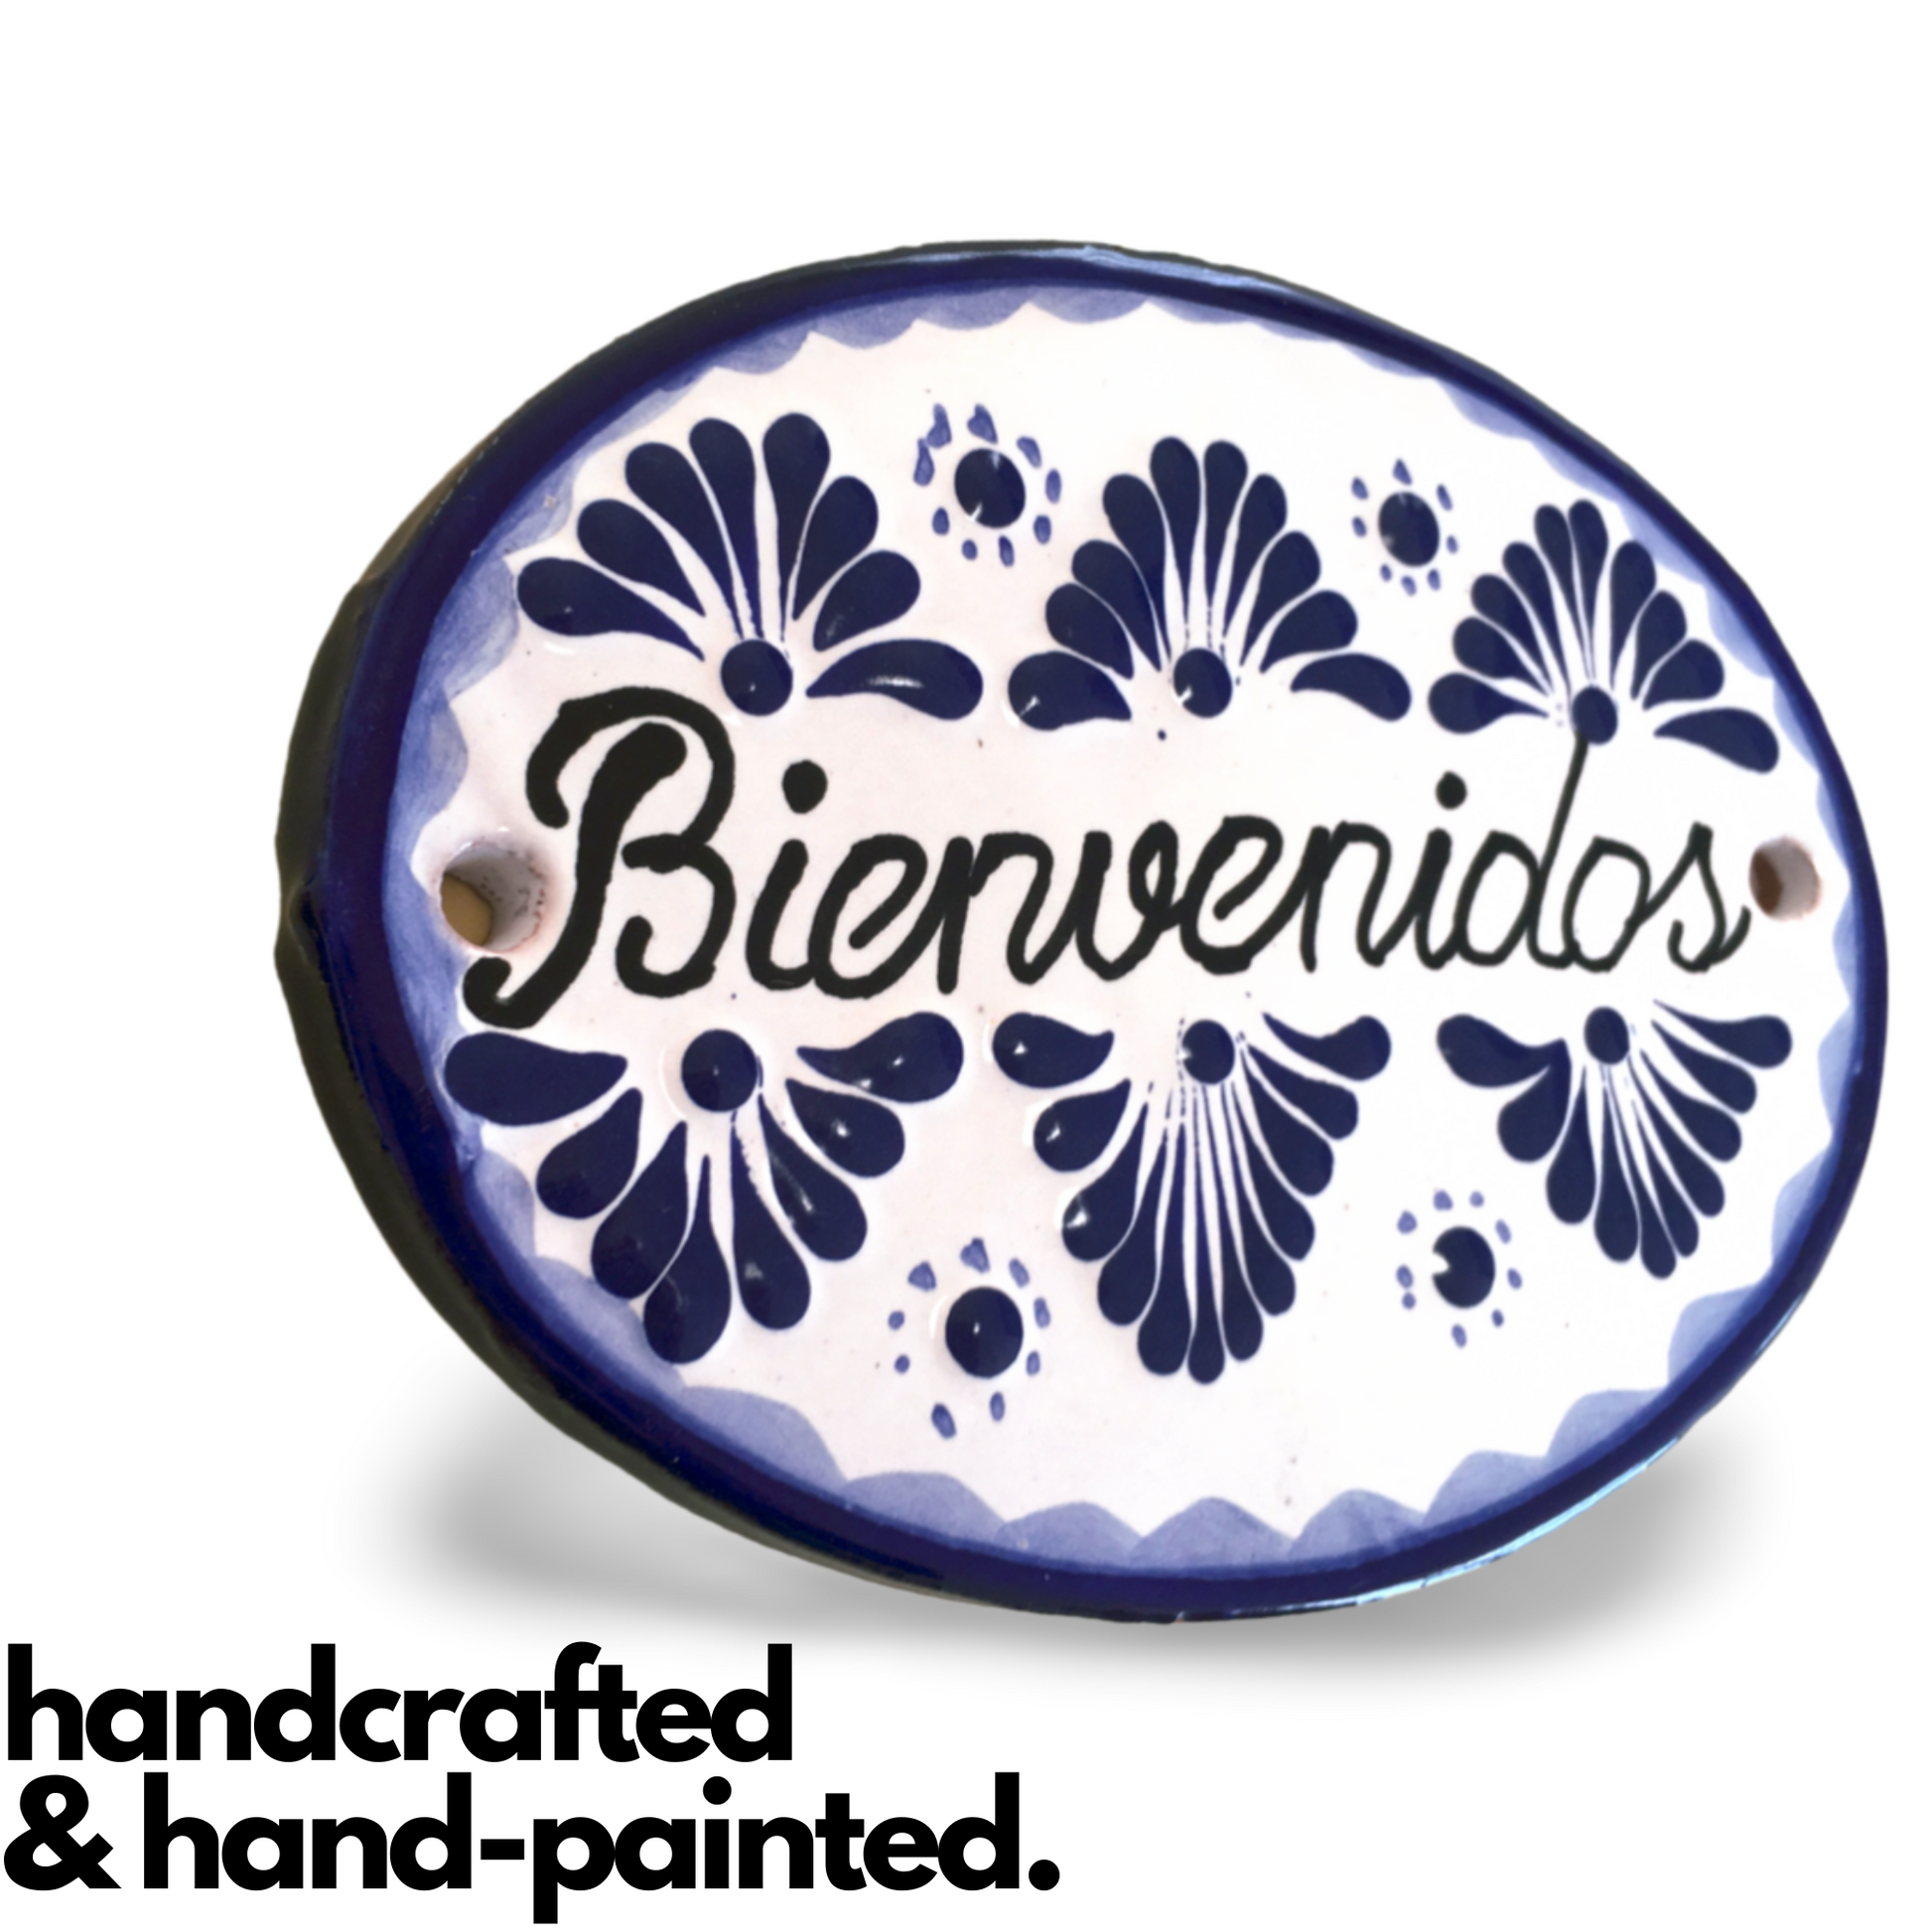 Talavera Welcome Bienvenidos Sign - Hand Painted Wall Decor